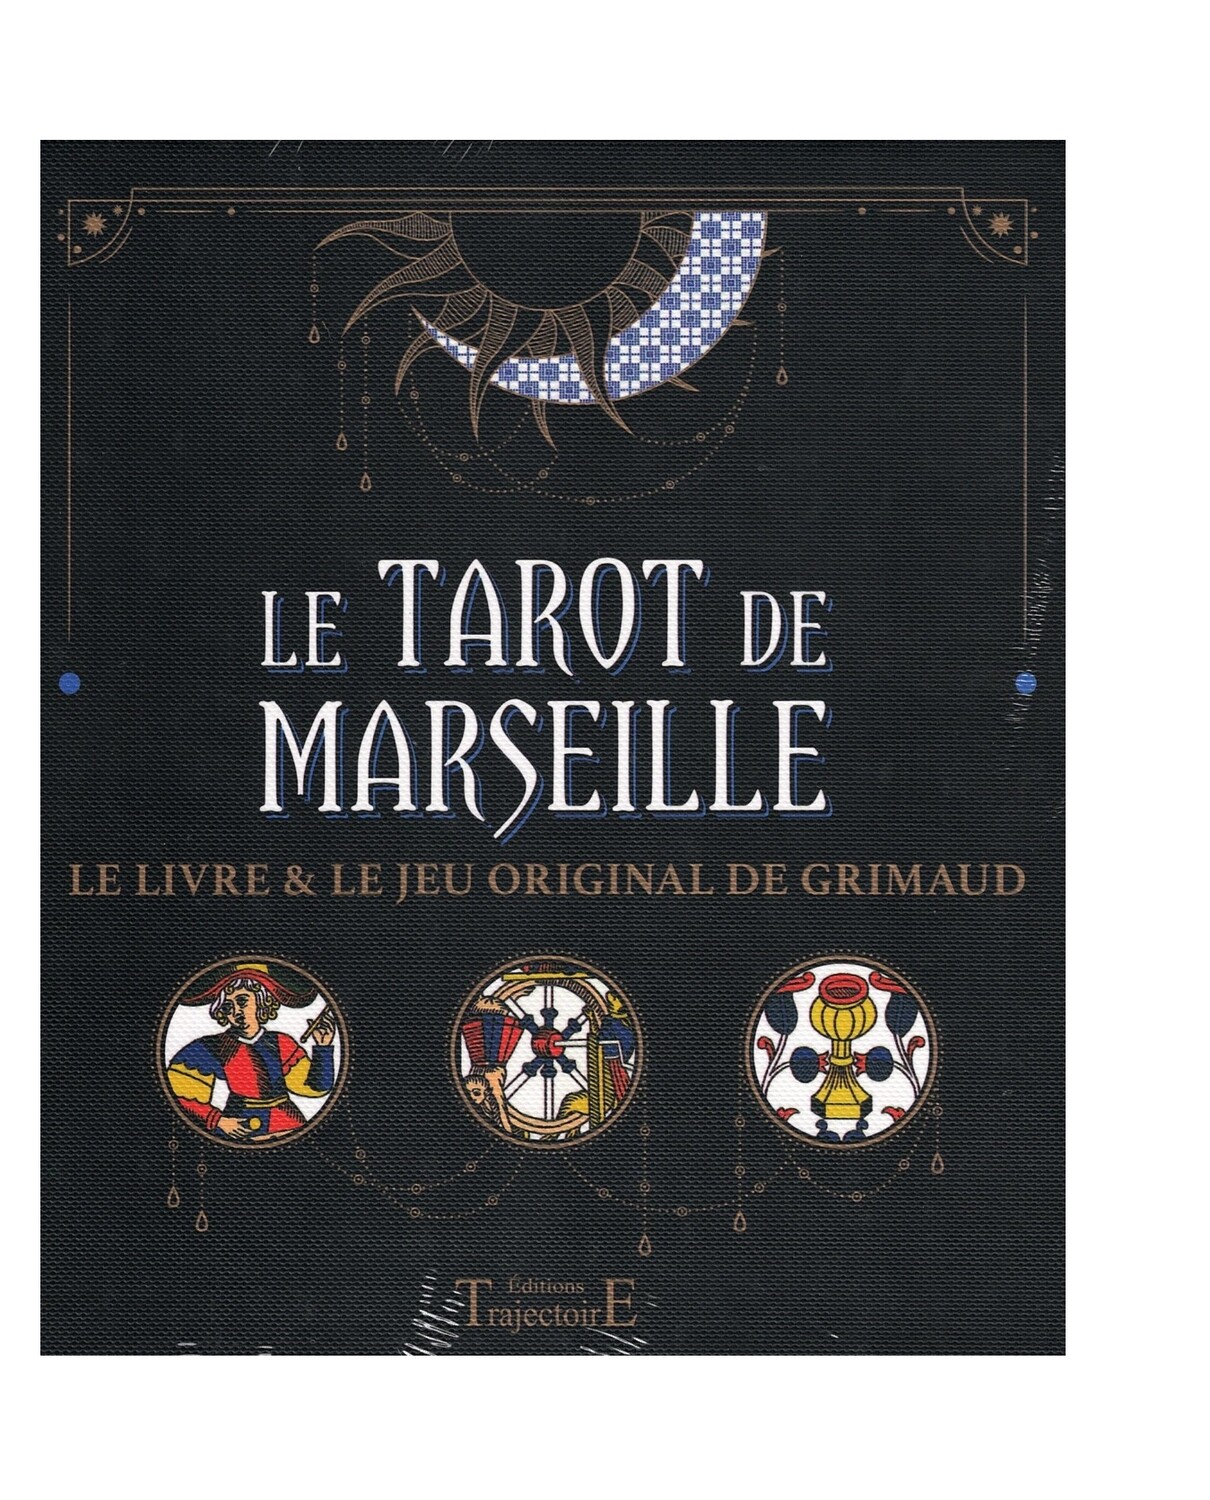 Le tarot de Marseille Le livre & le jeu original